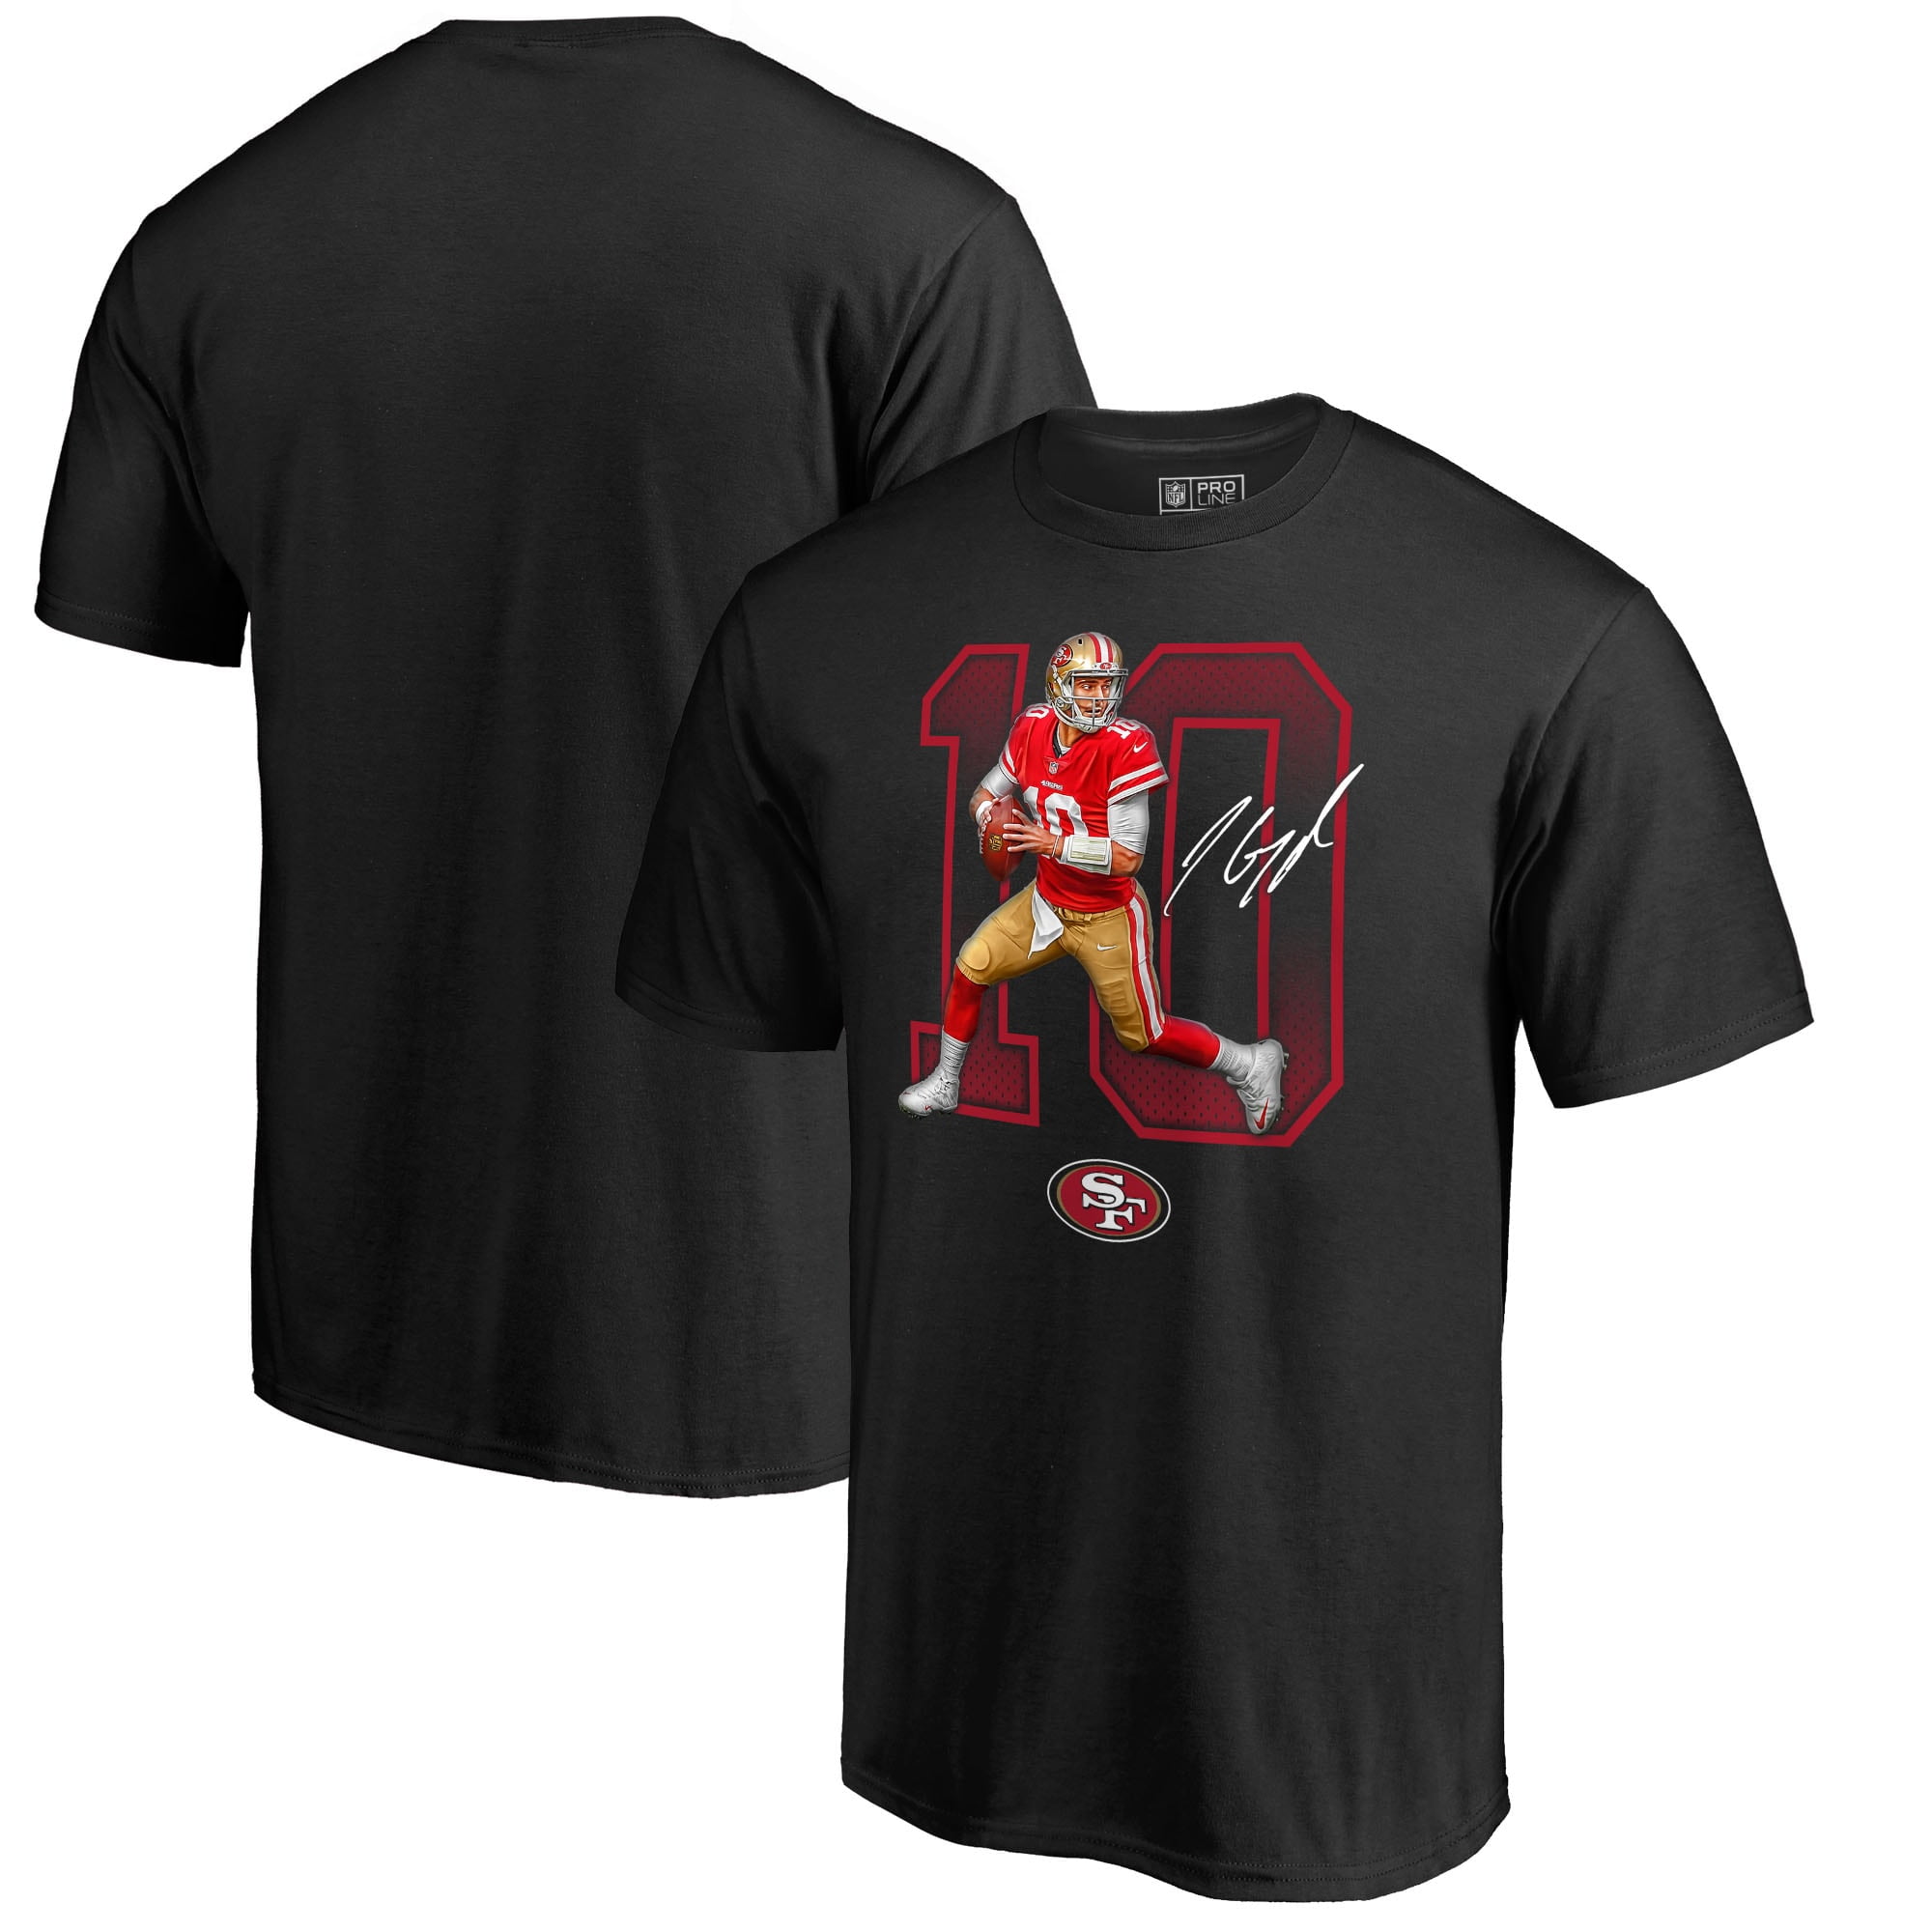 Jimmy Garoppolo San Francisco 49ers NFL Pro Line by Fanatics Branded ...